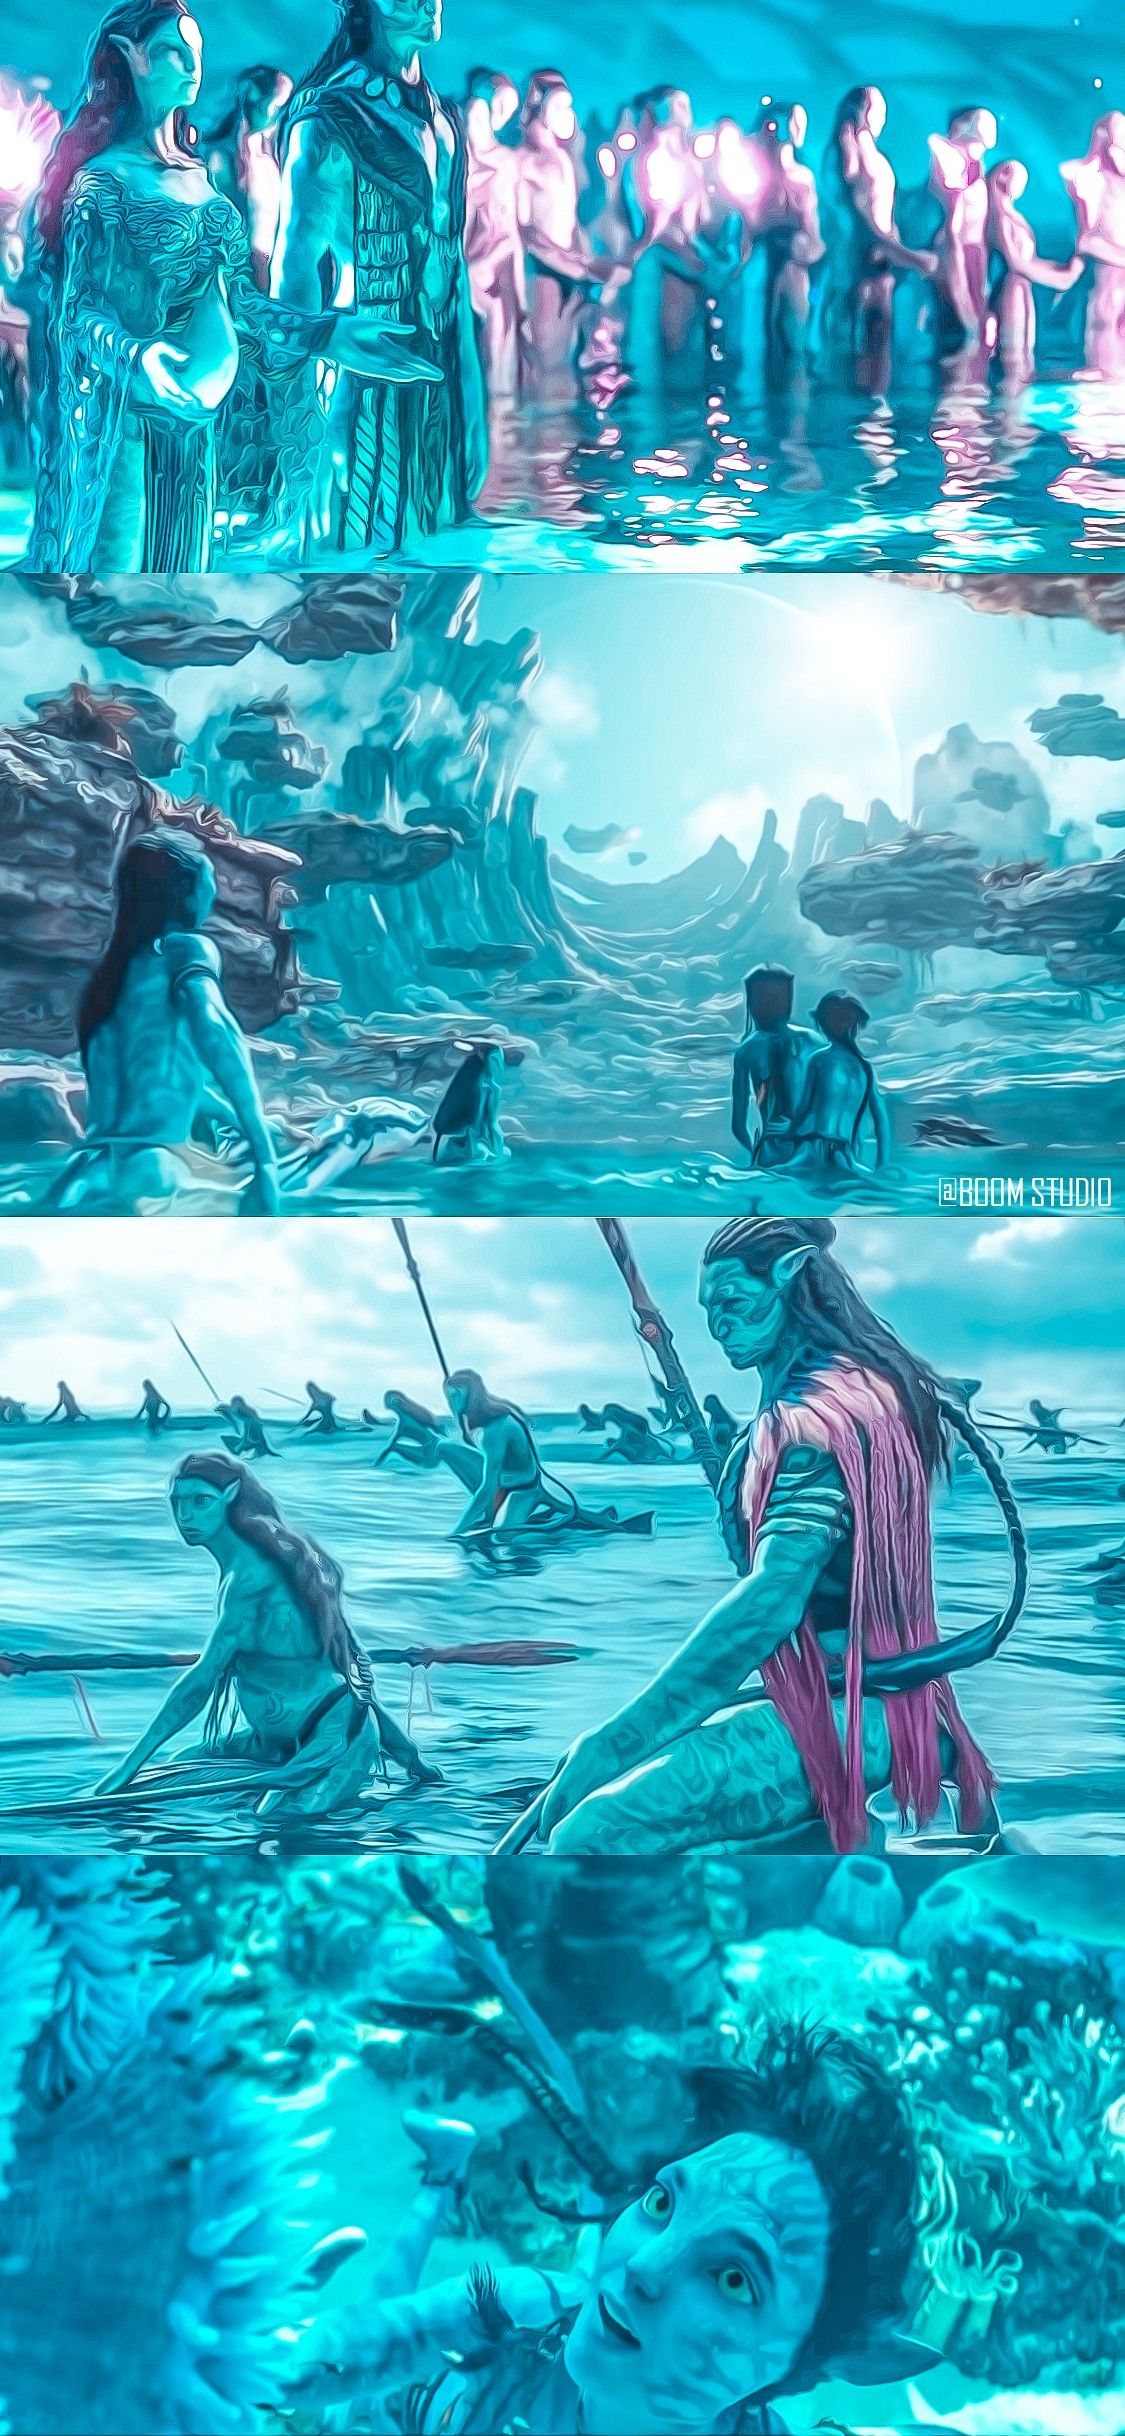 Avatar 2 (2022) 4k wallpaper. Avatar, Wallpaper, Art drawings